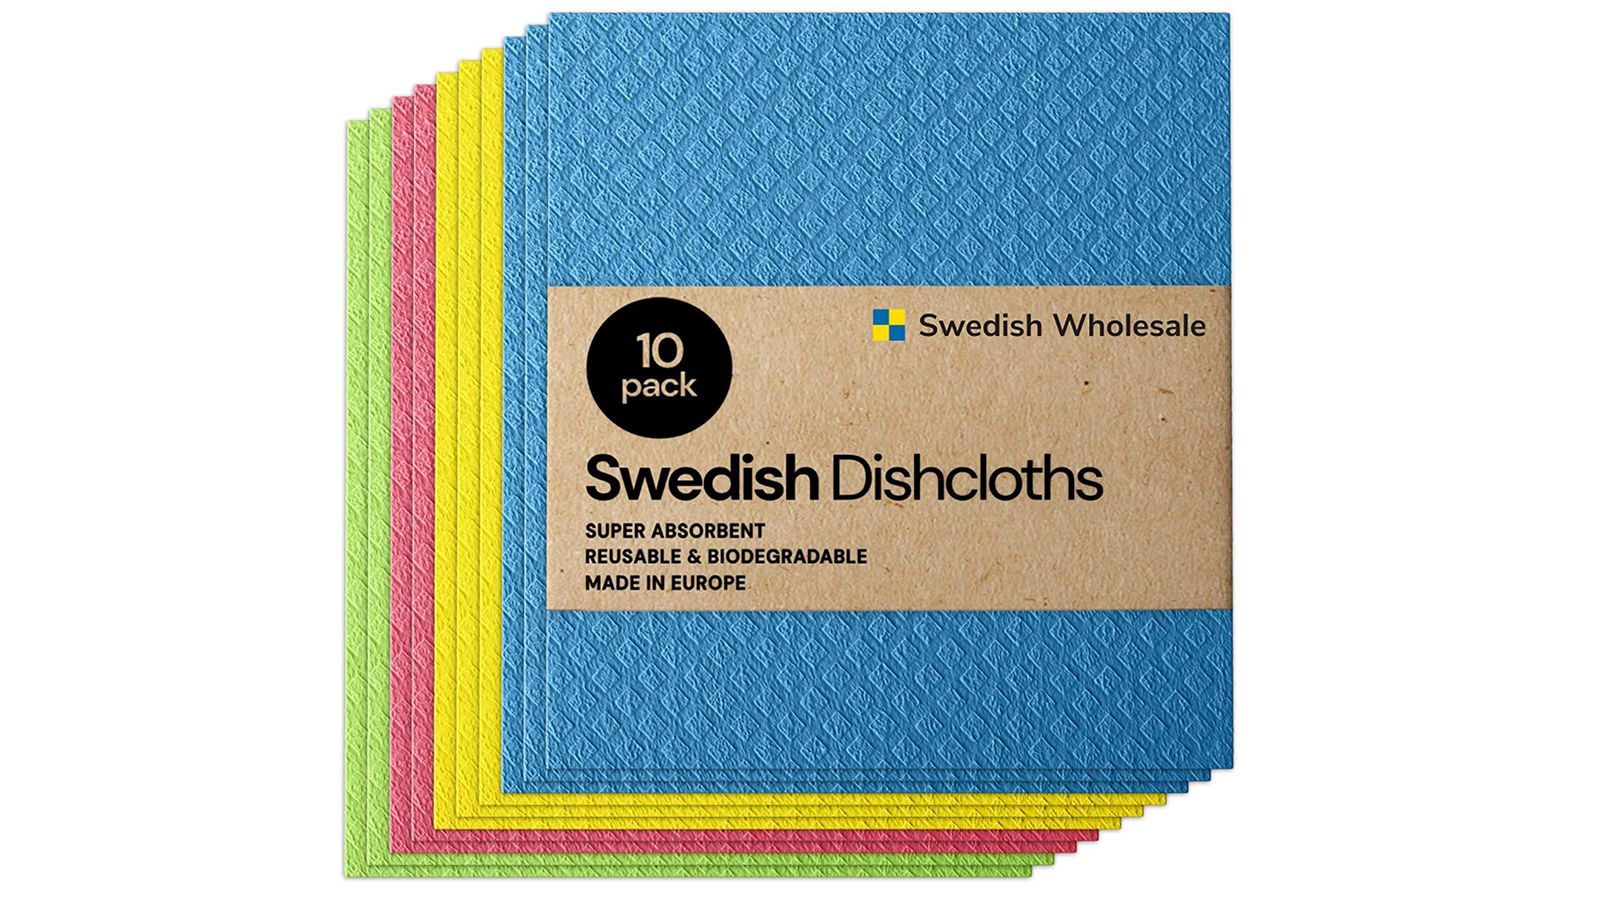 Swedish dishcloth review: An eco-friendly paper towel | CNN Underscored